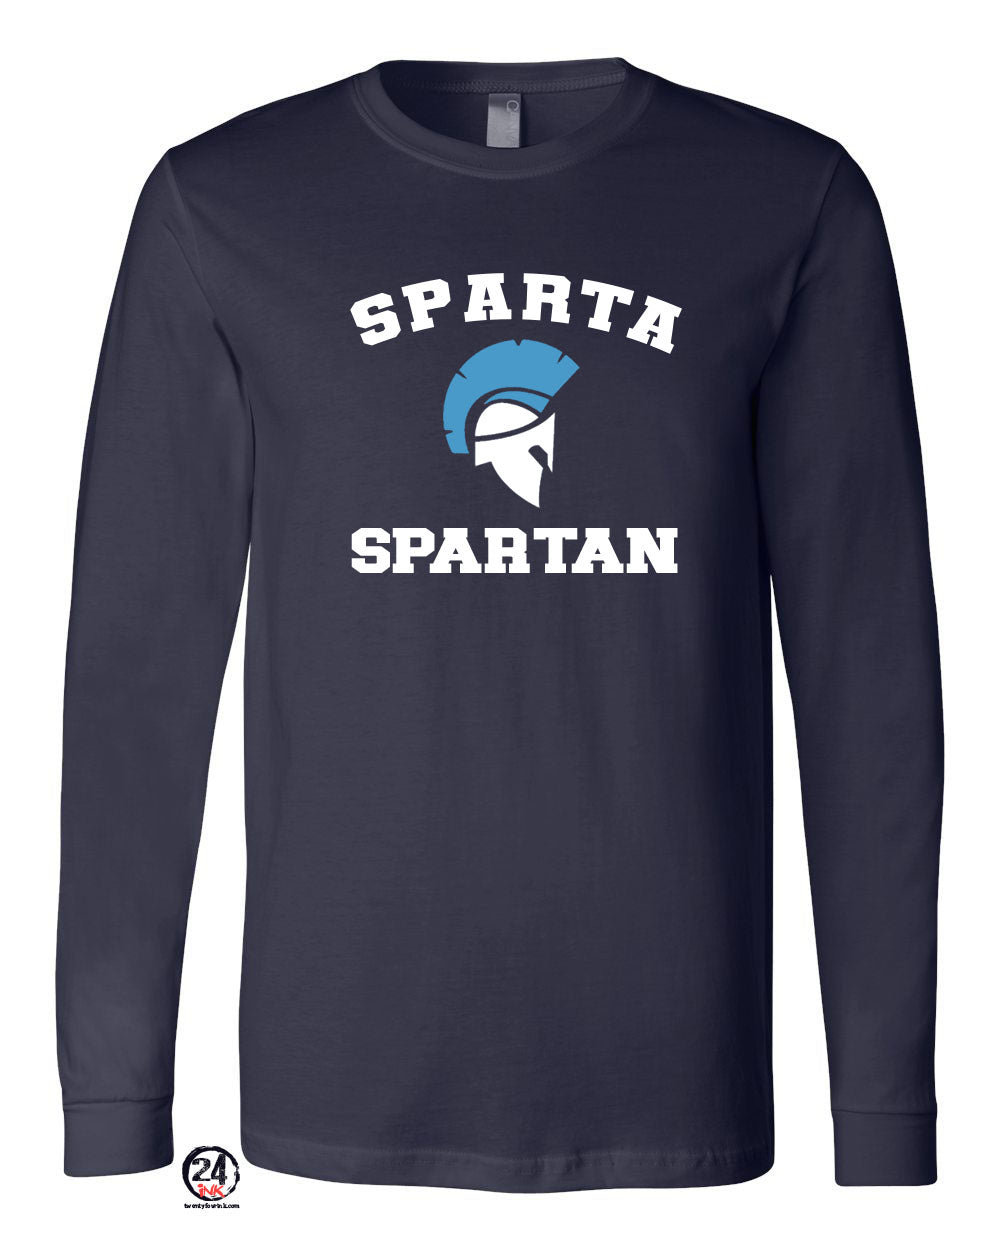 Sparta School Design 1 Long Sleeve Shirt